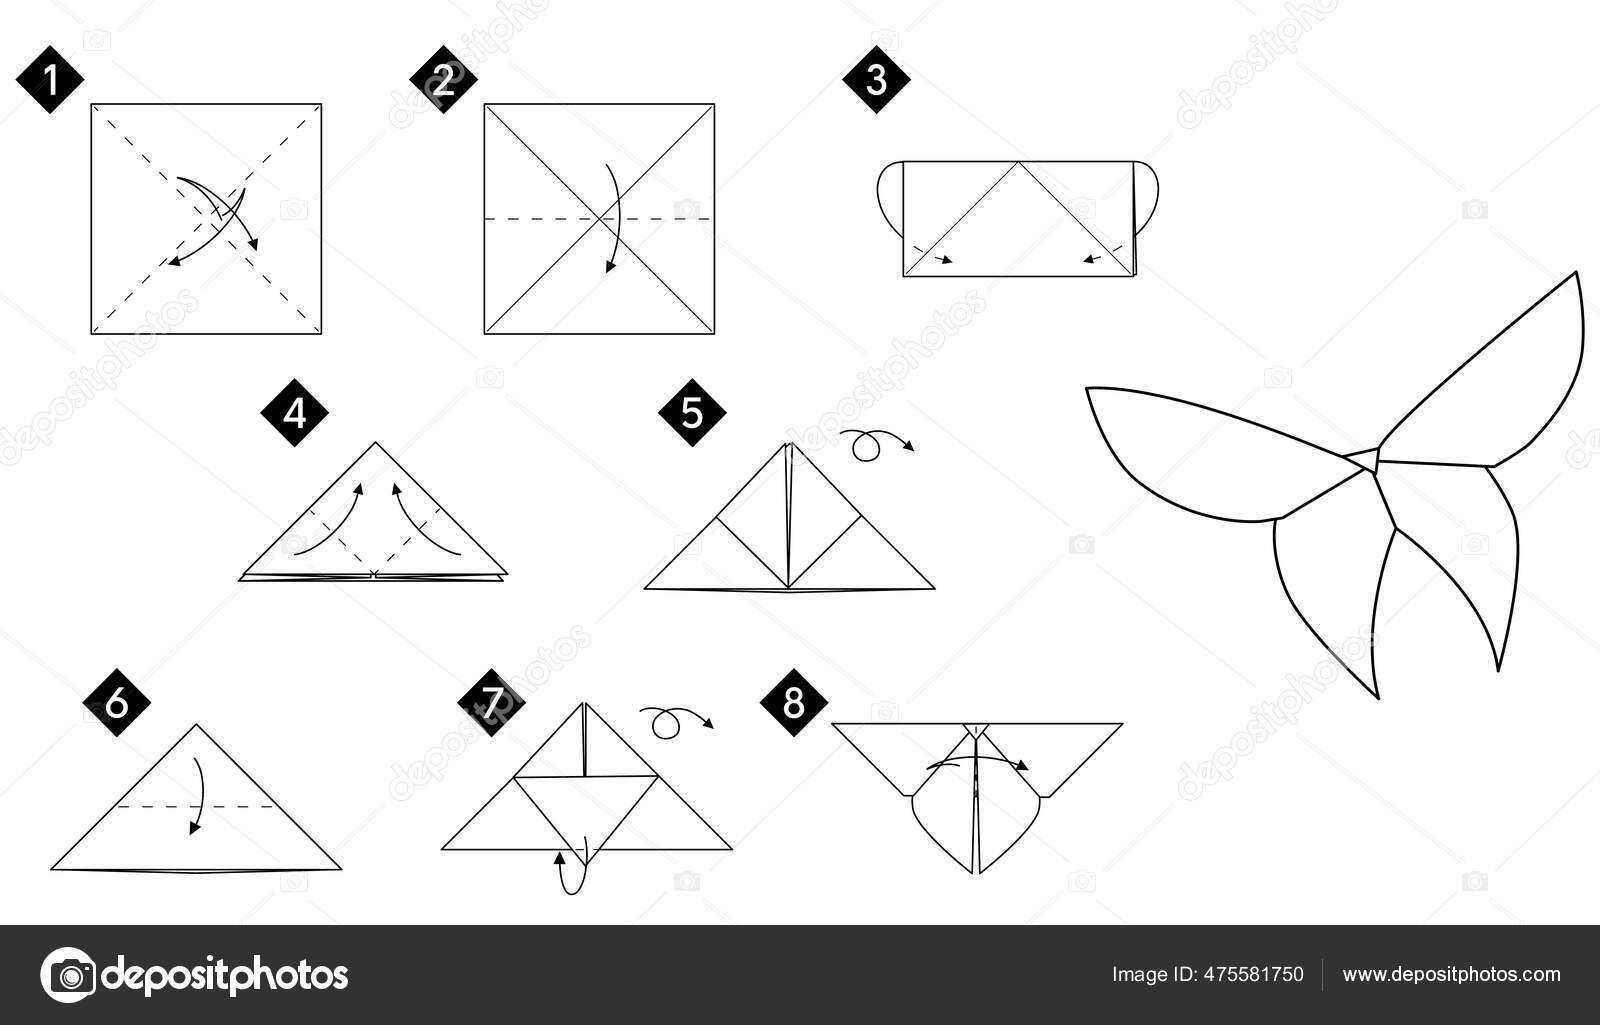 DIY une enveloppe en origami - Le Coléoptère Masqué